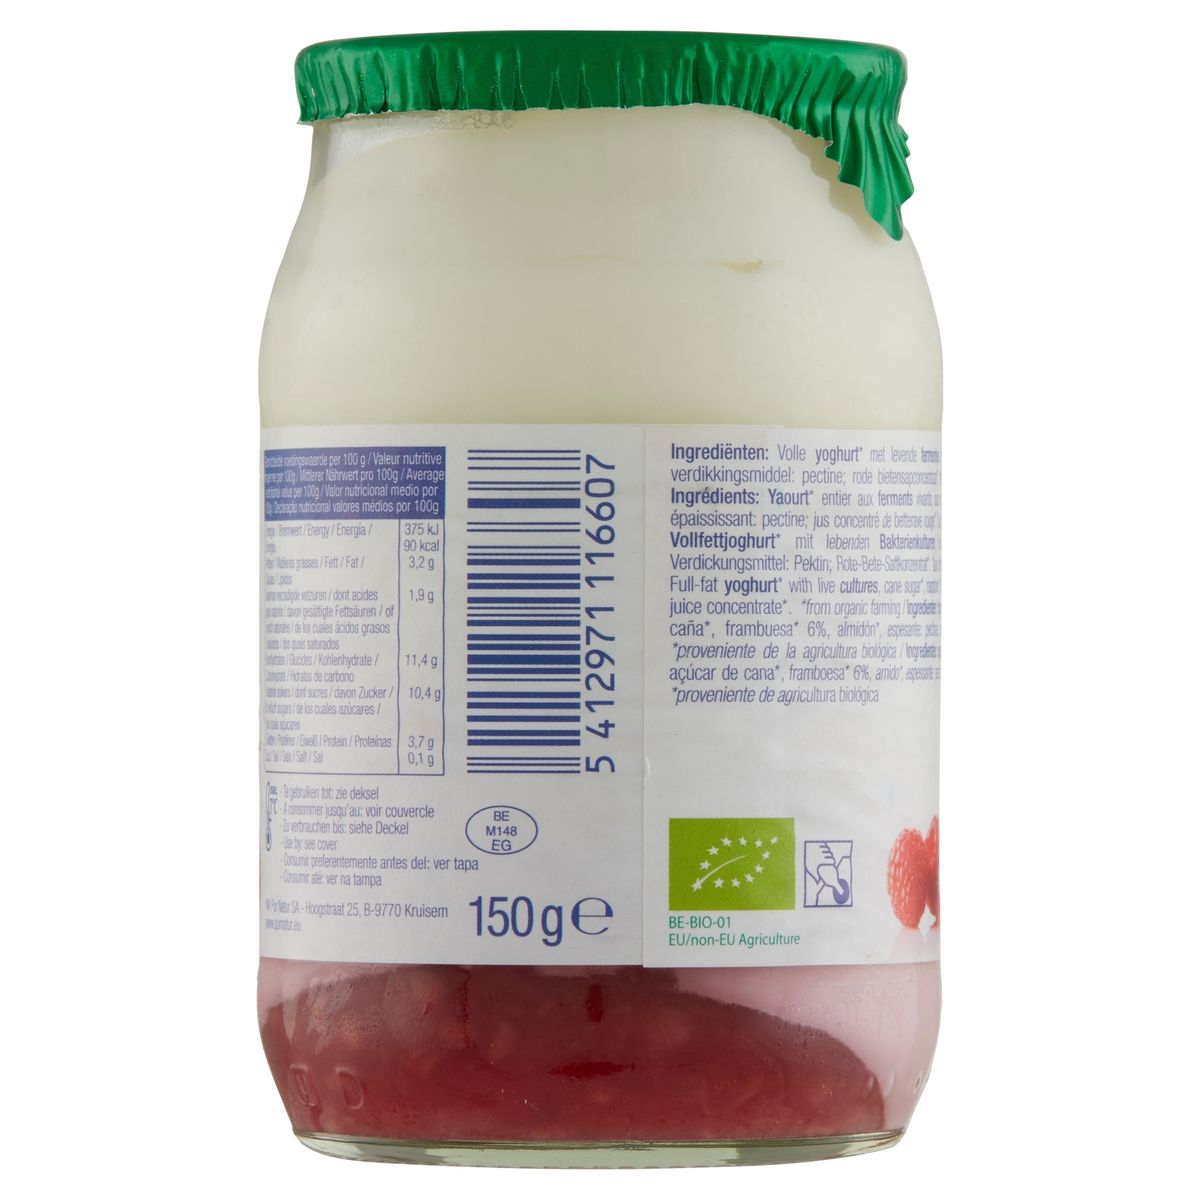 Pur Natur Bio Yoghurt Framboos 150 g